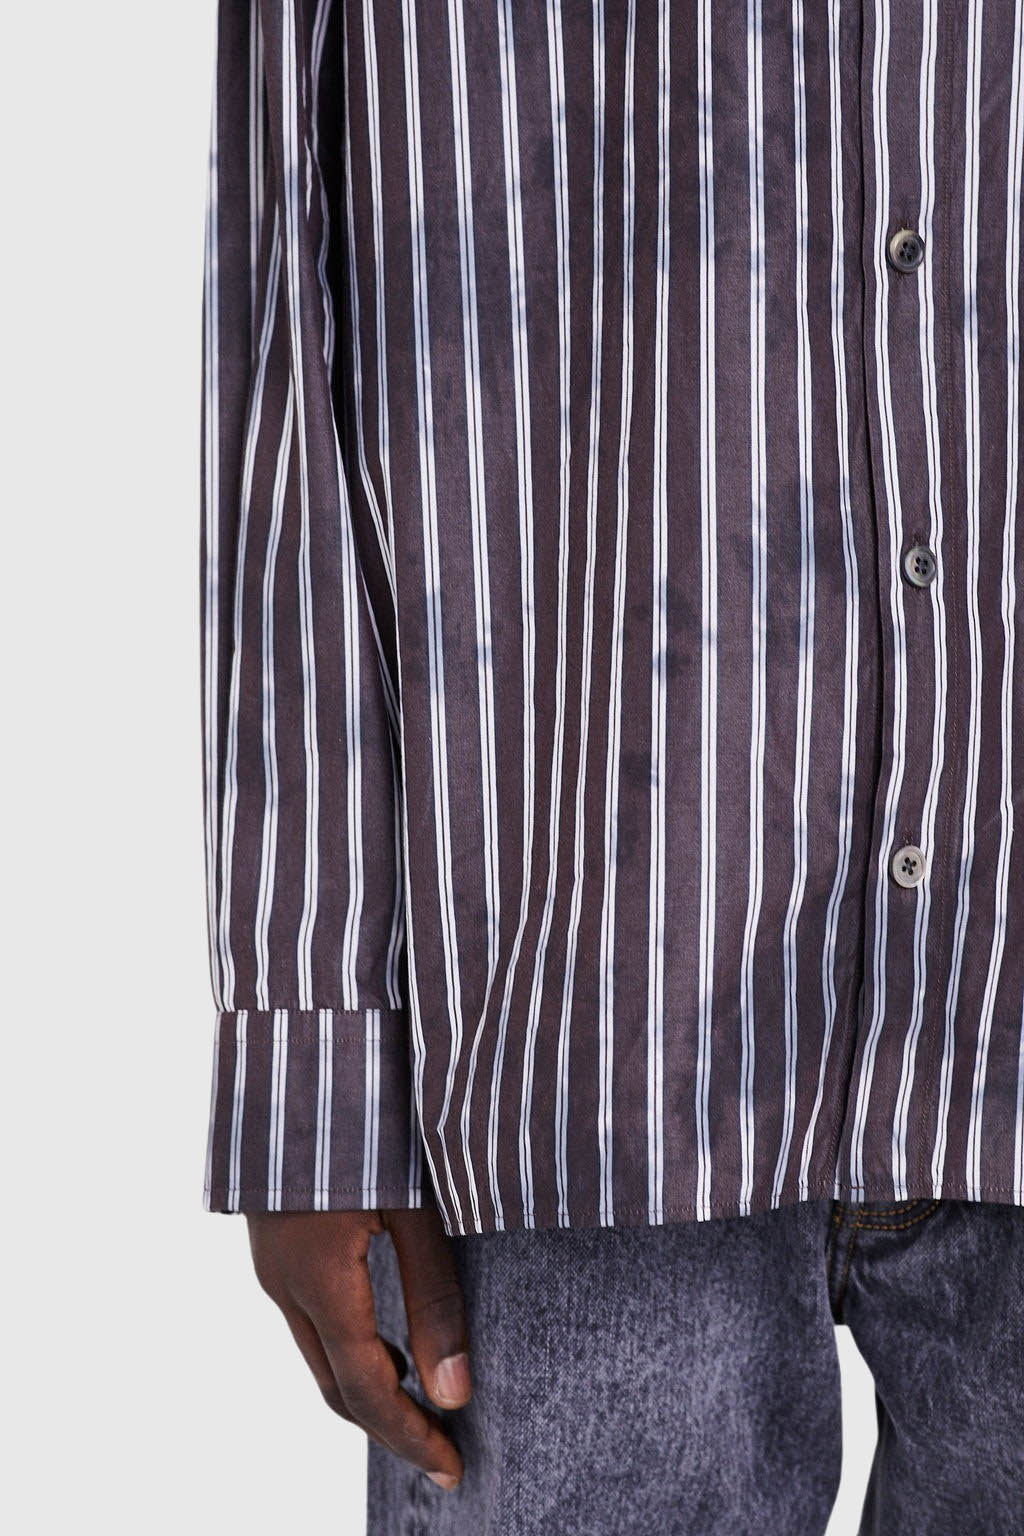 Études Illusion Shirt - Striped Dyed Shirt Etudes 